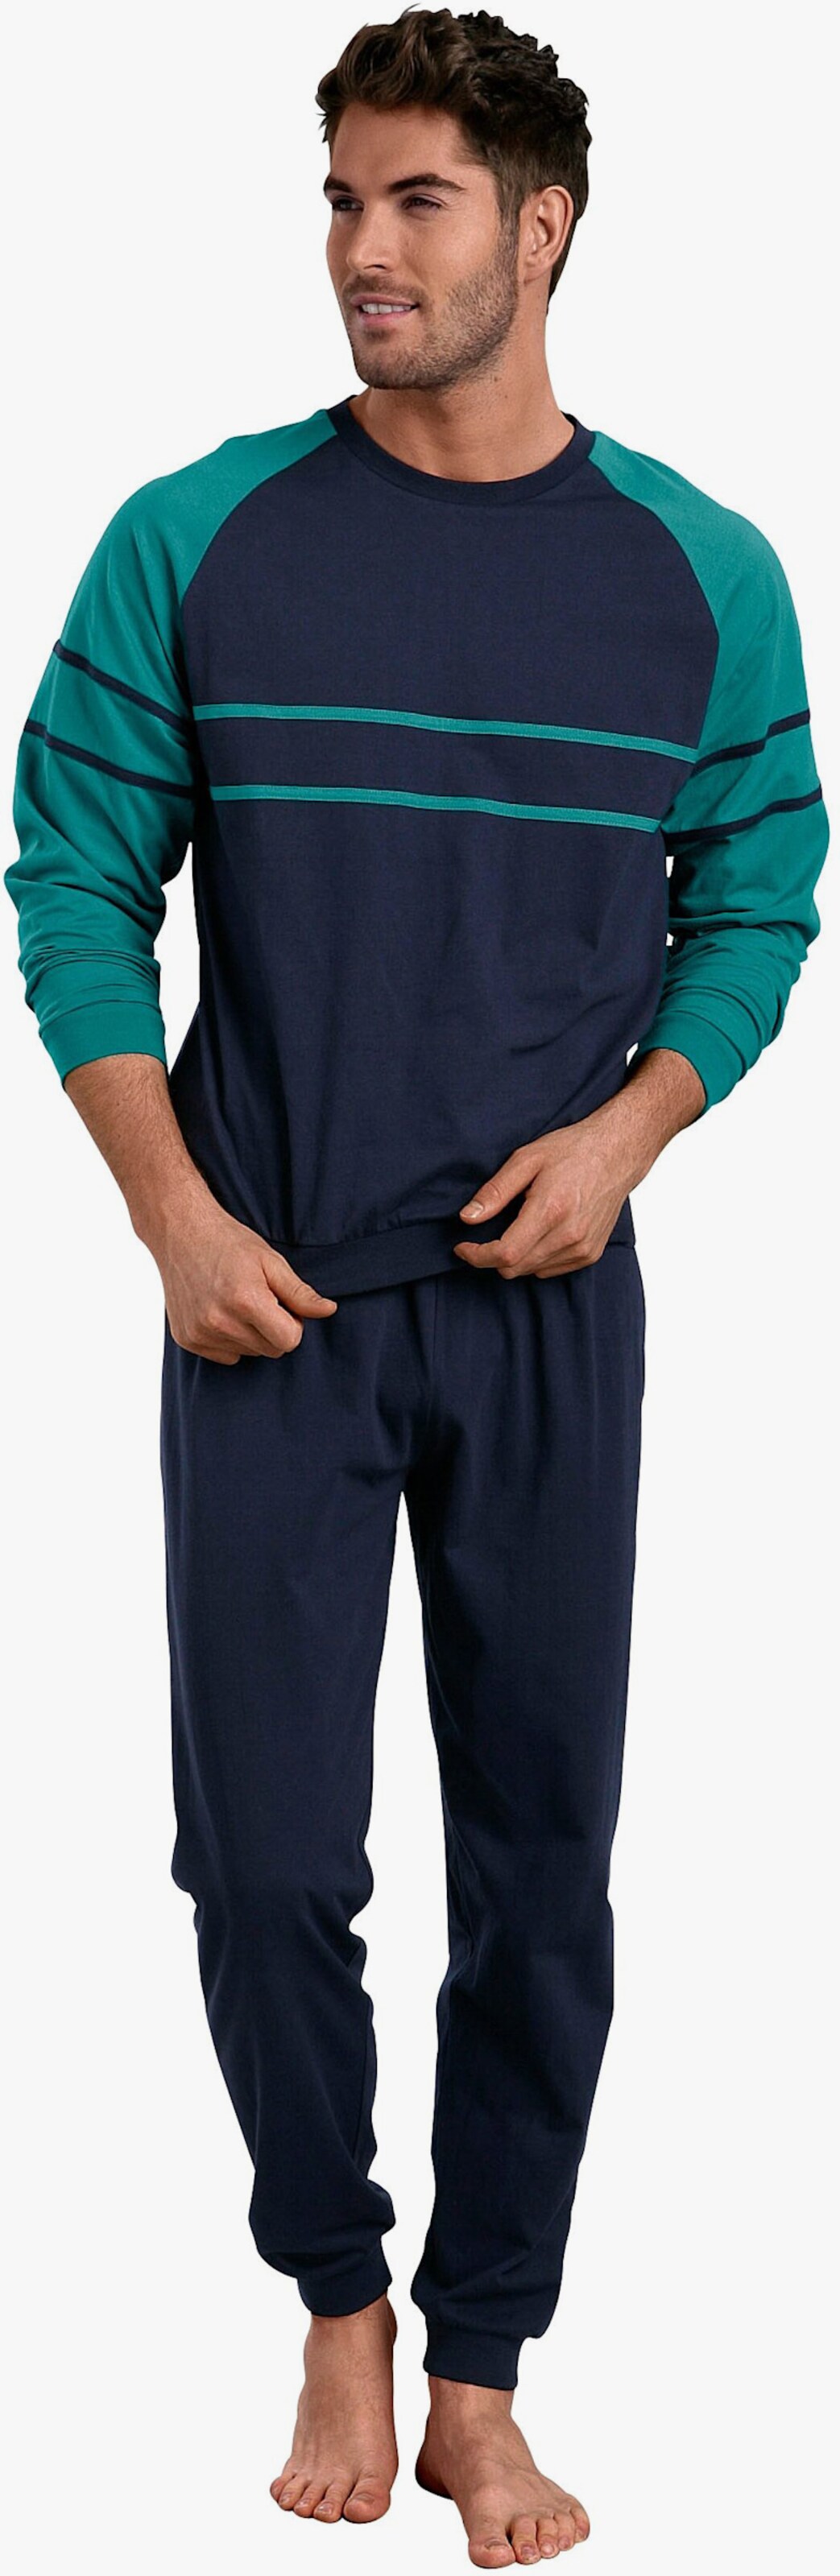 Pyjama - grün, marine